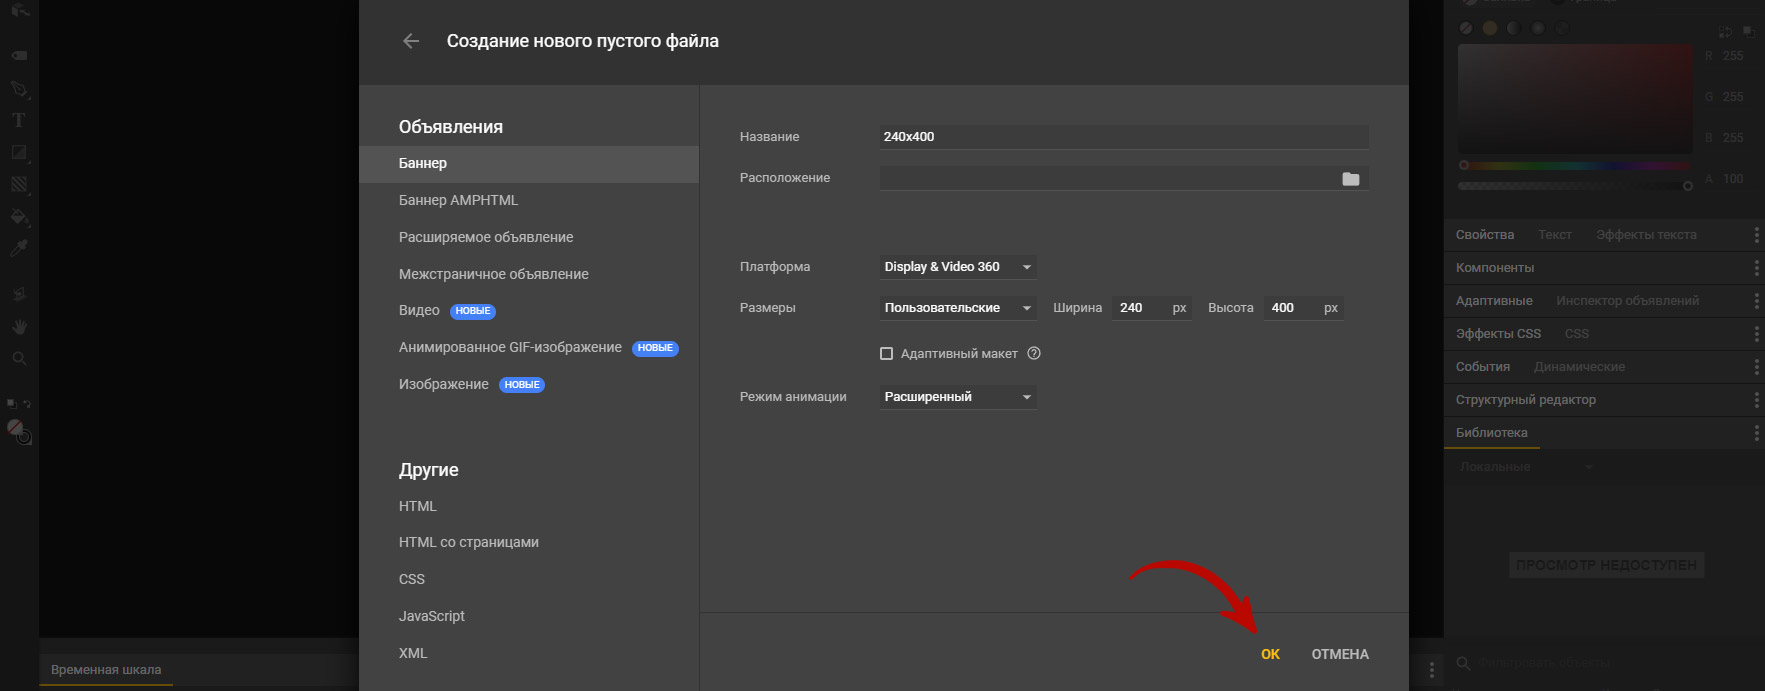 Screenshot of Google Web Designer software. Confirming settings